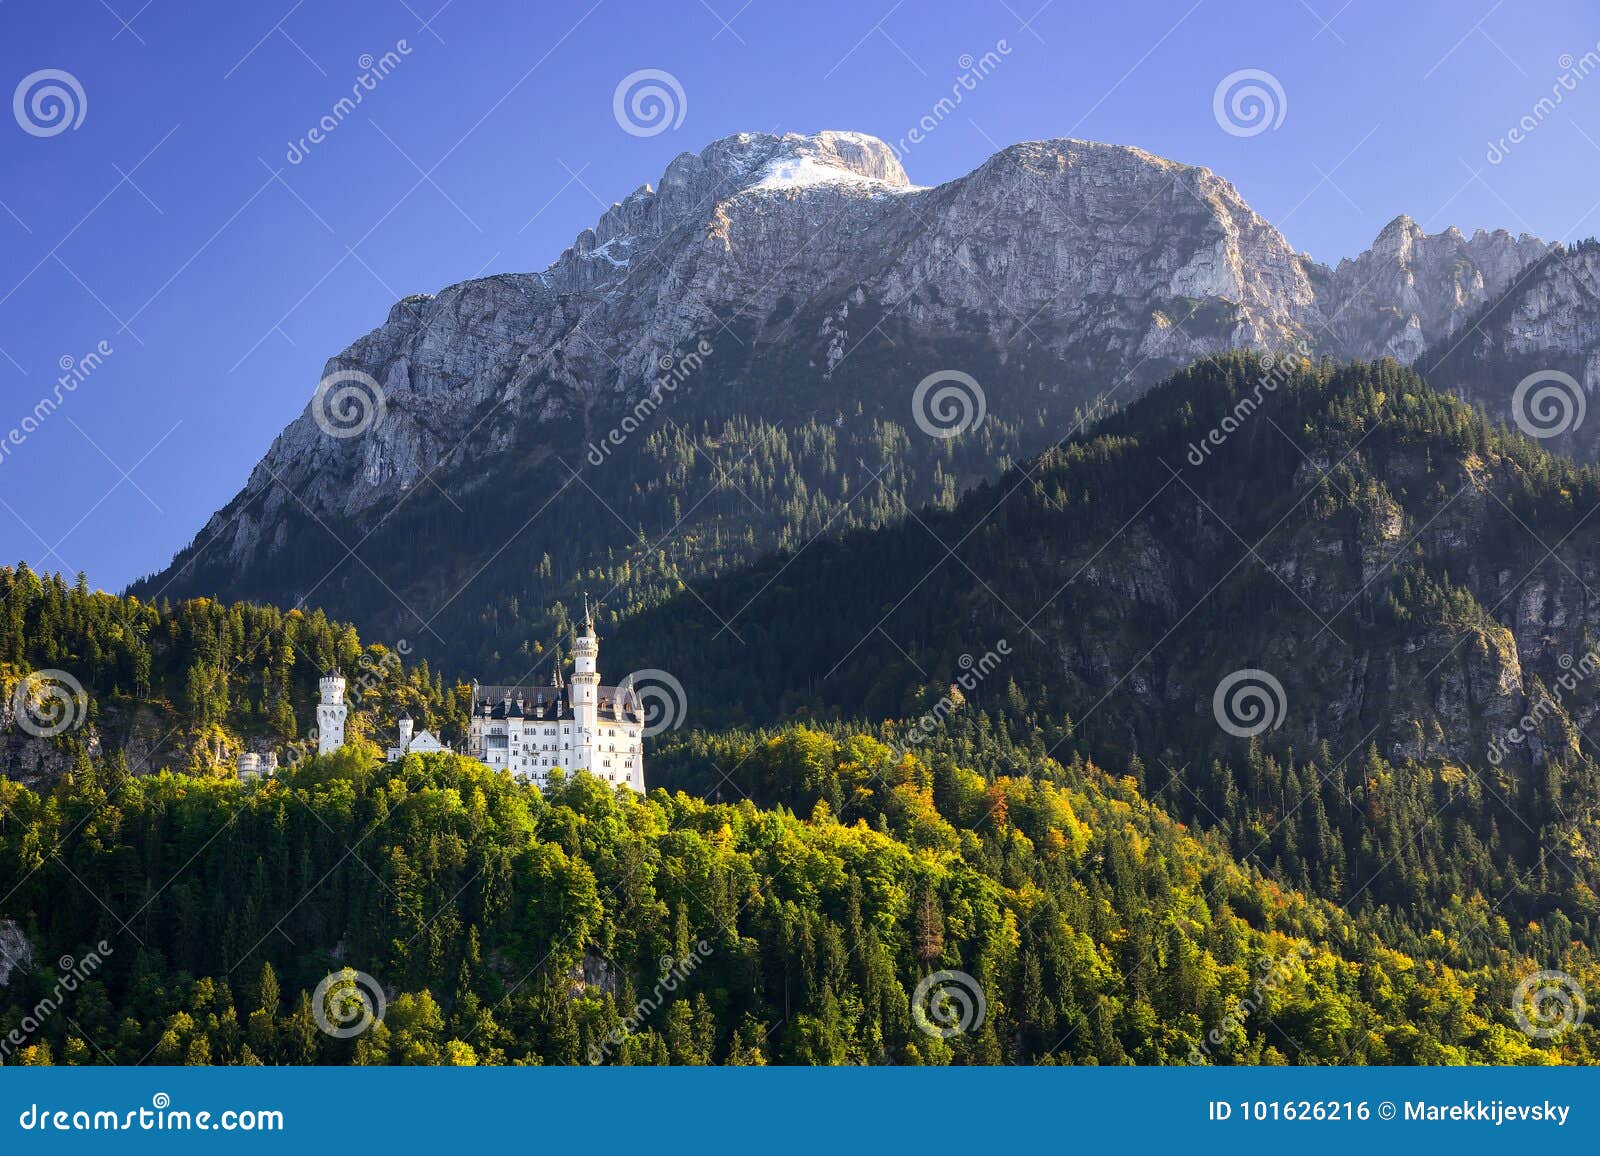 neuschwanstein castle with scenic mountain landscape near fussen, bavaria, germany